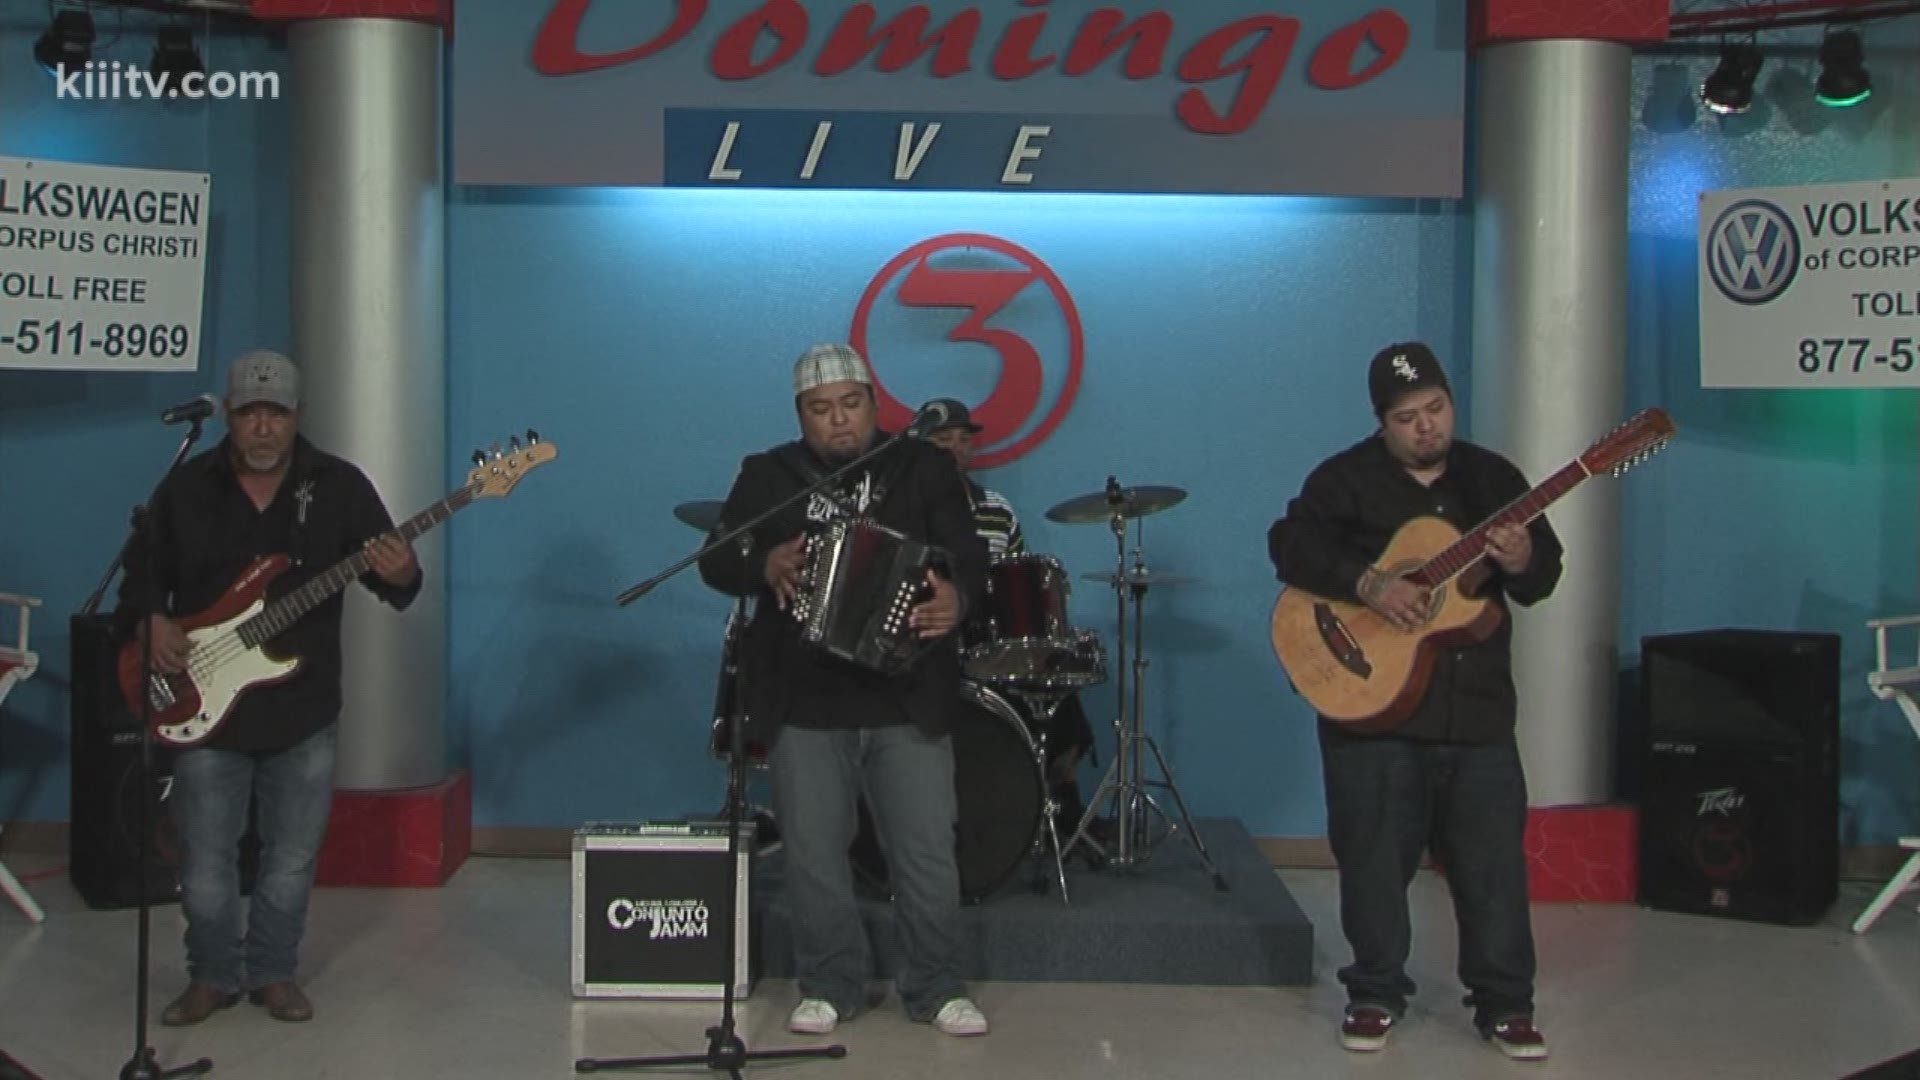 Michael Longoria Y Conjunto Jamm Performing on Domingo Live!